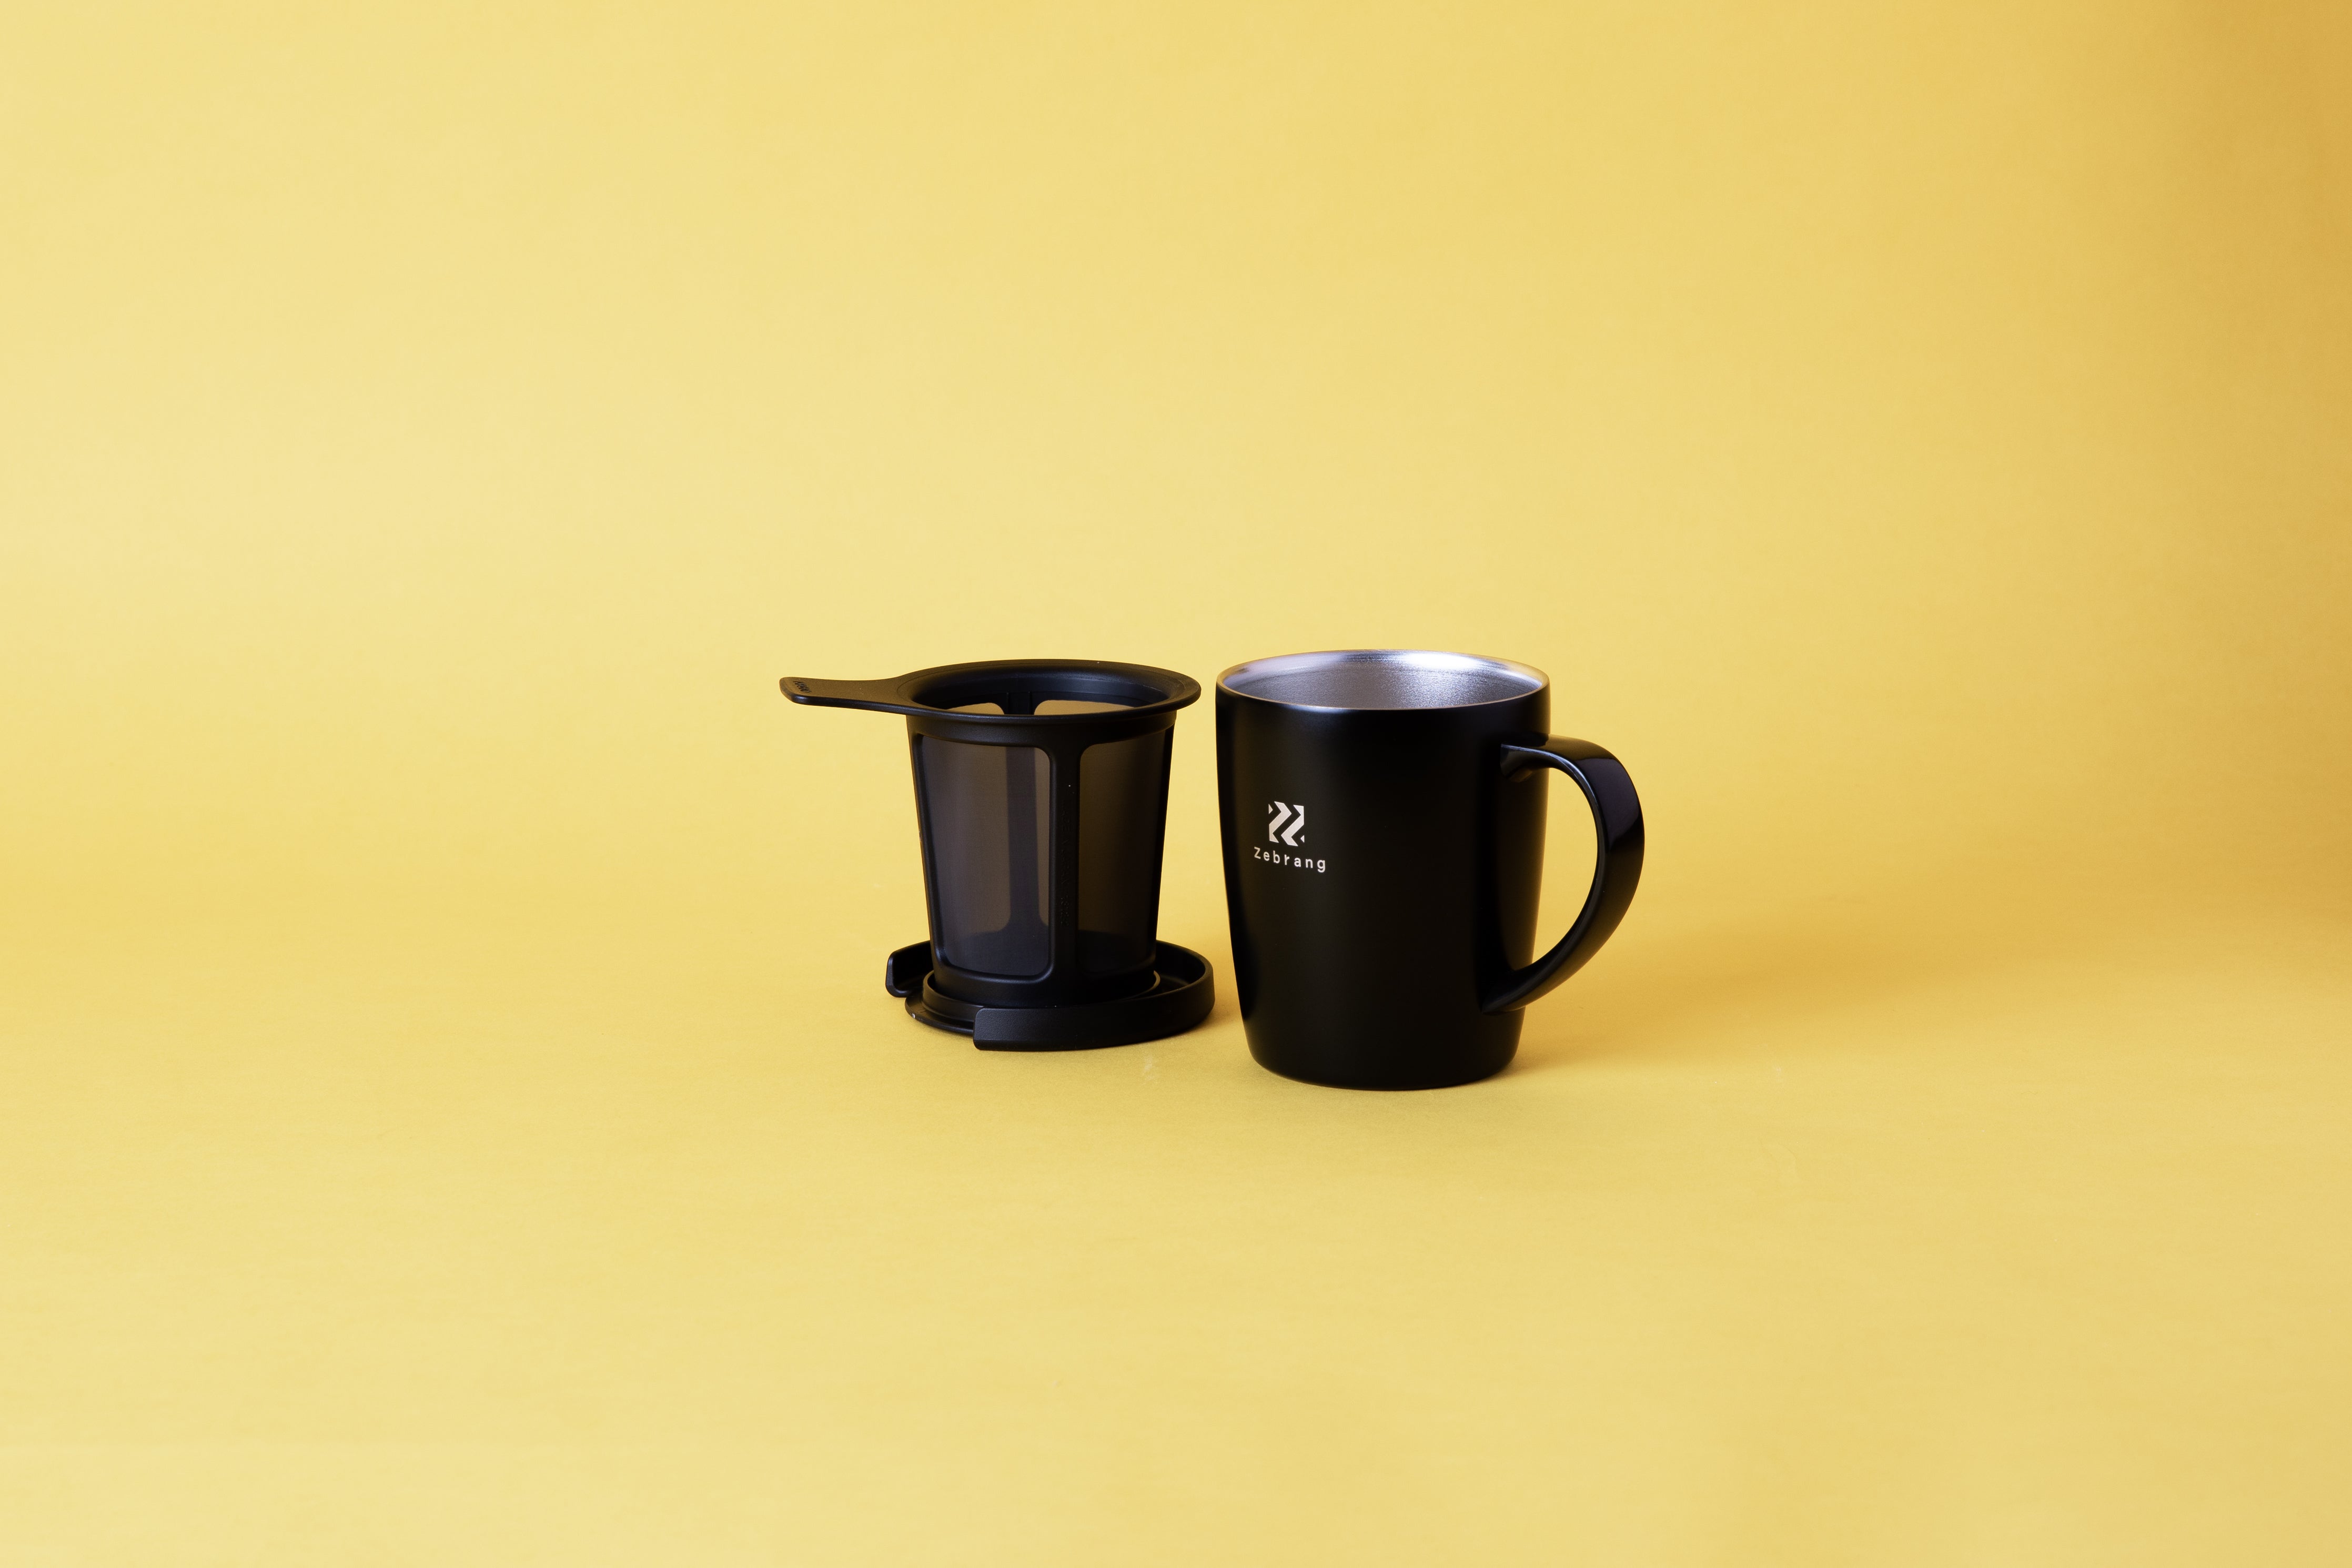 Zebrang Outdoor Double Wall Coffee Maker Mug – Hario USA